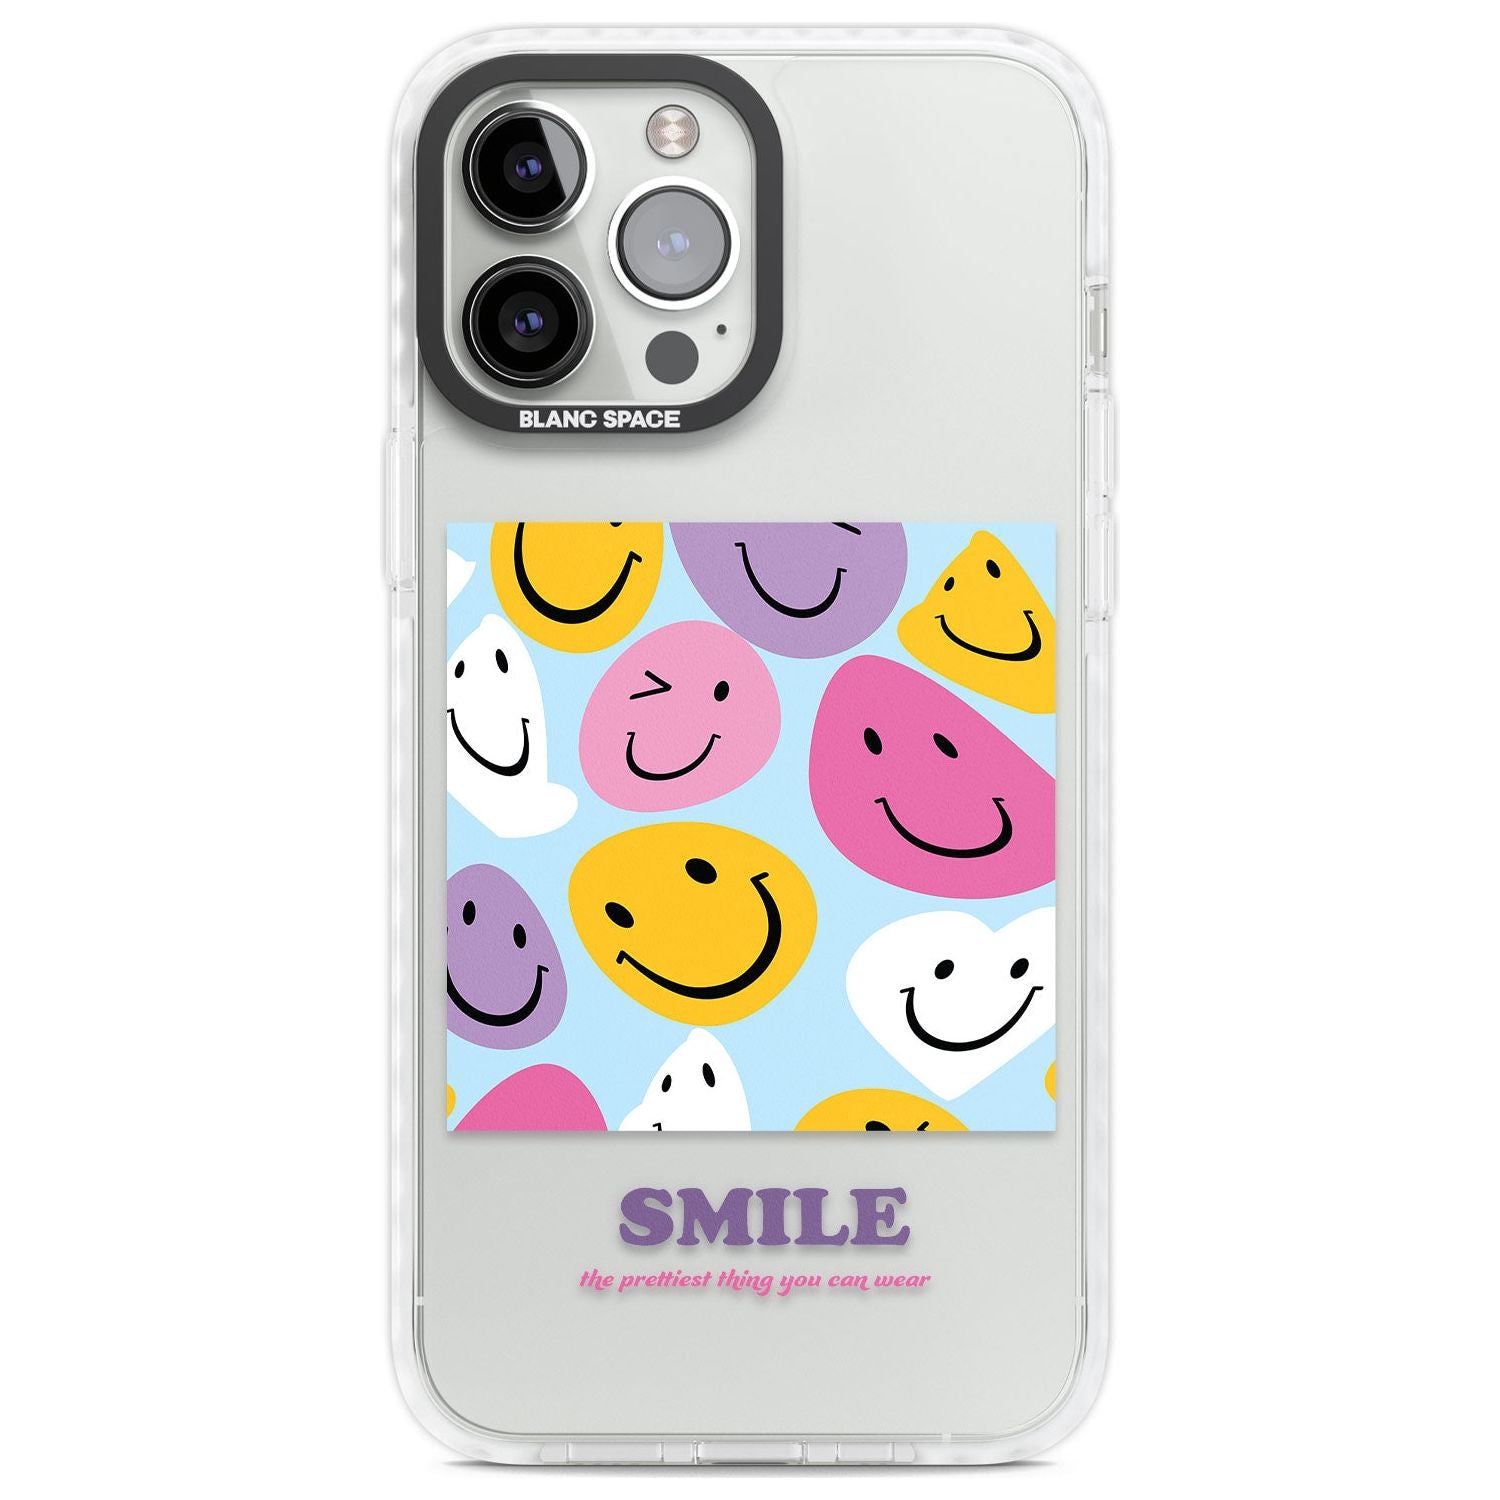 A Smile Phone Case iPhone 13 Pro Max / Impact Case,iPhone 14 Pro Max / Impact Case Blanc Space